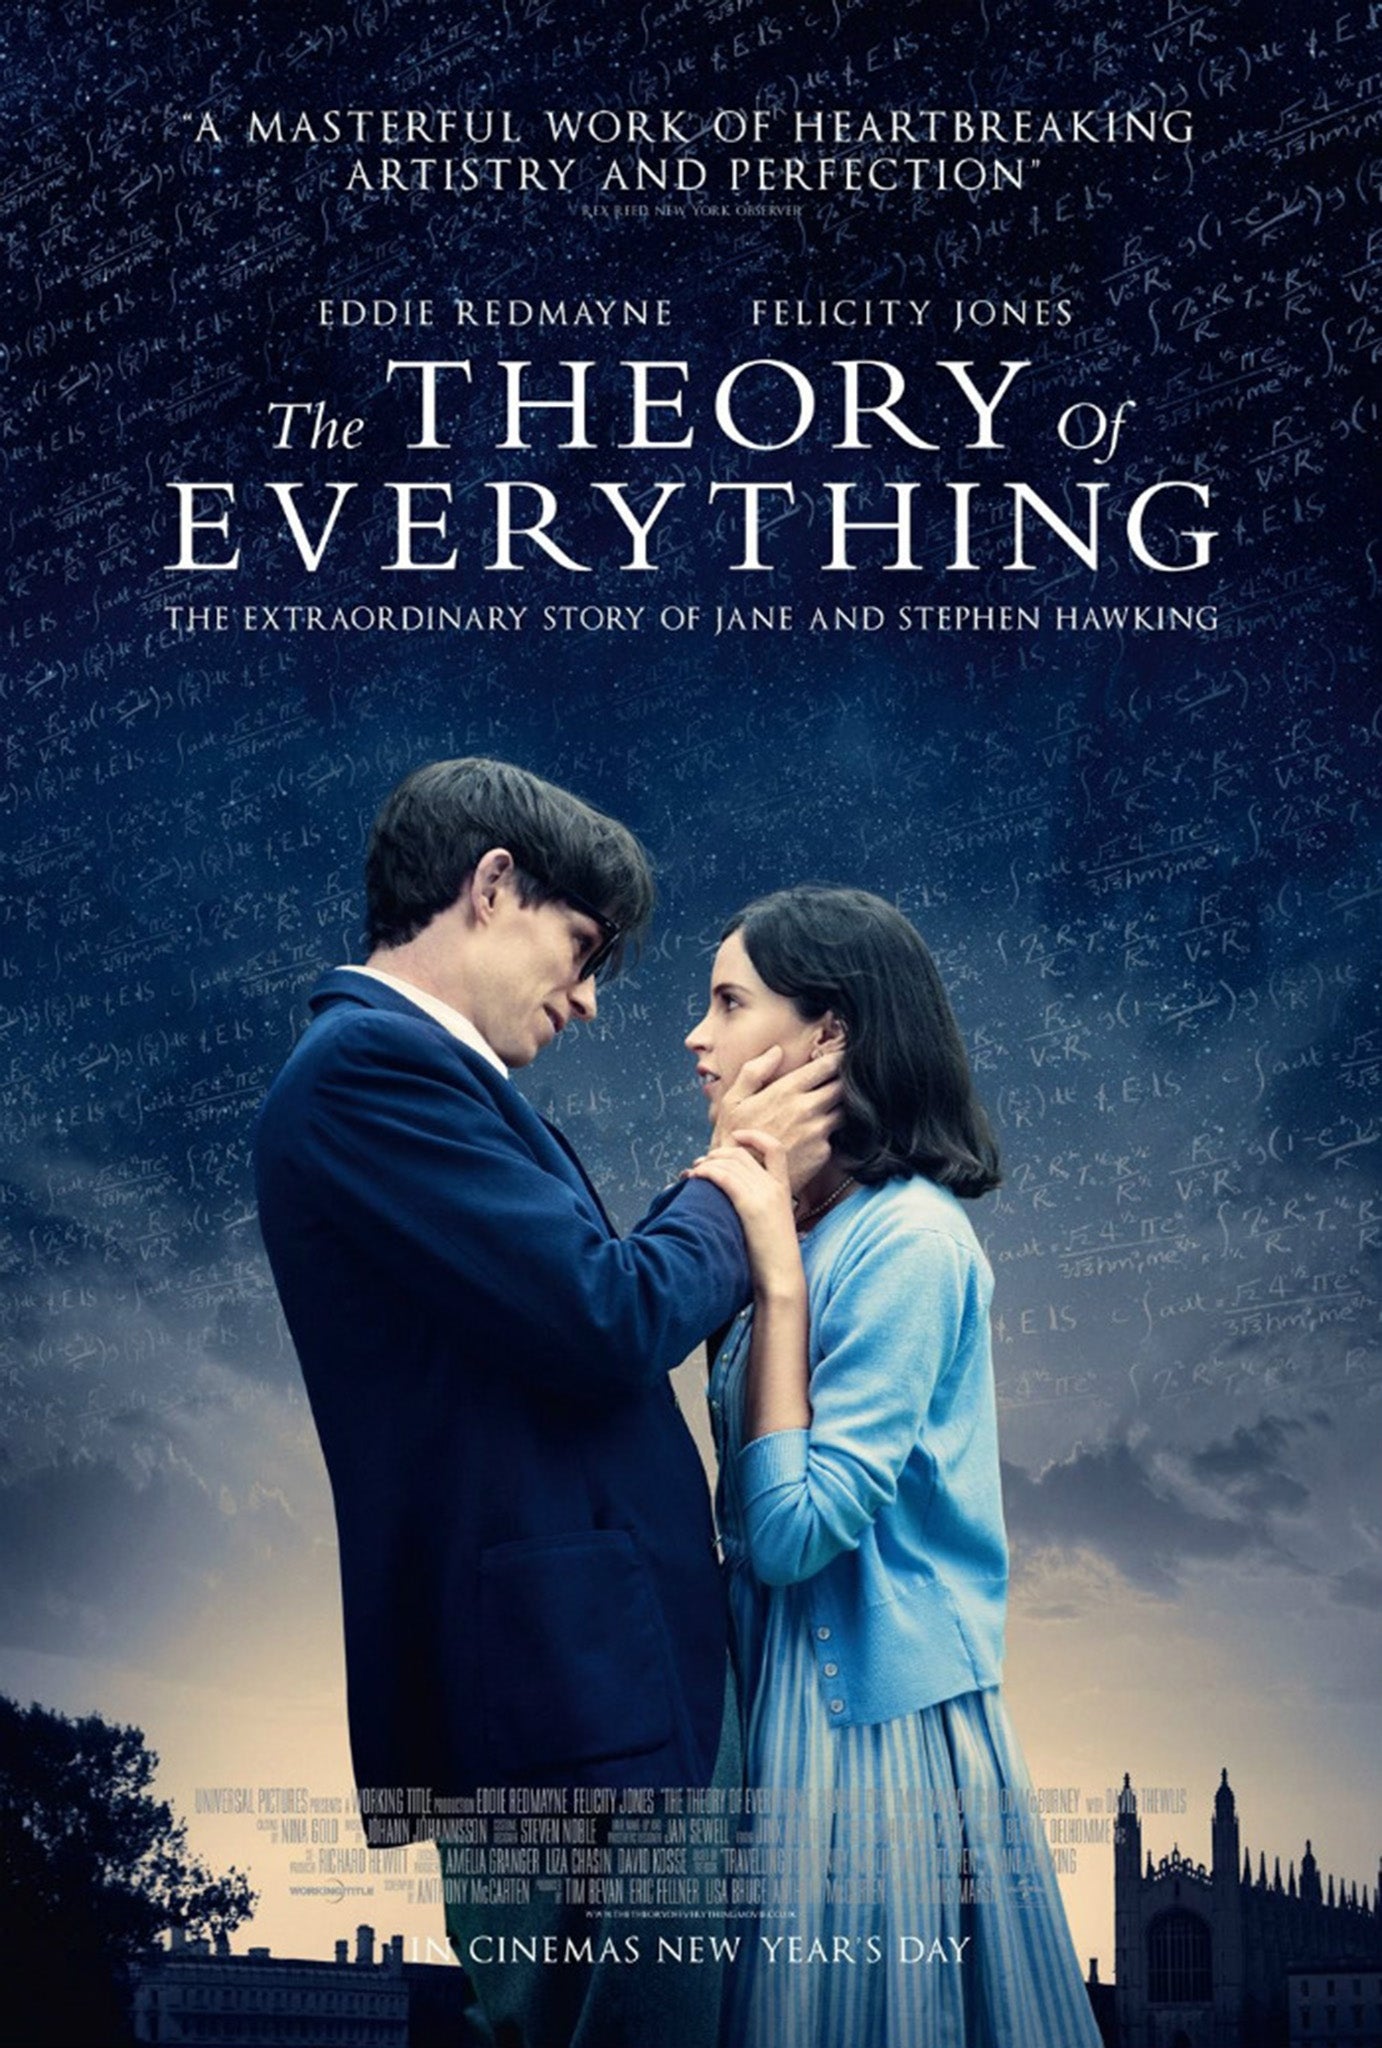 The Theory of Everything stars Eddie Redmayne and Felicity Jones